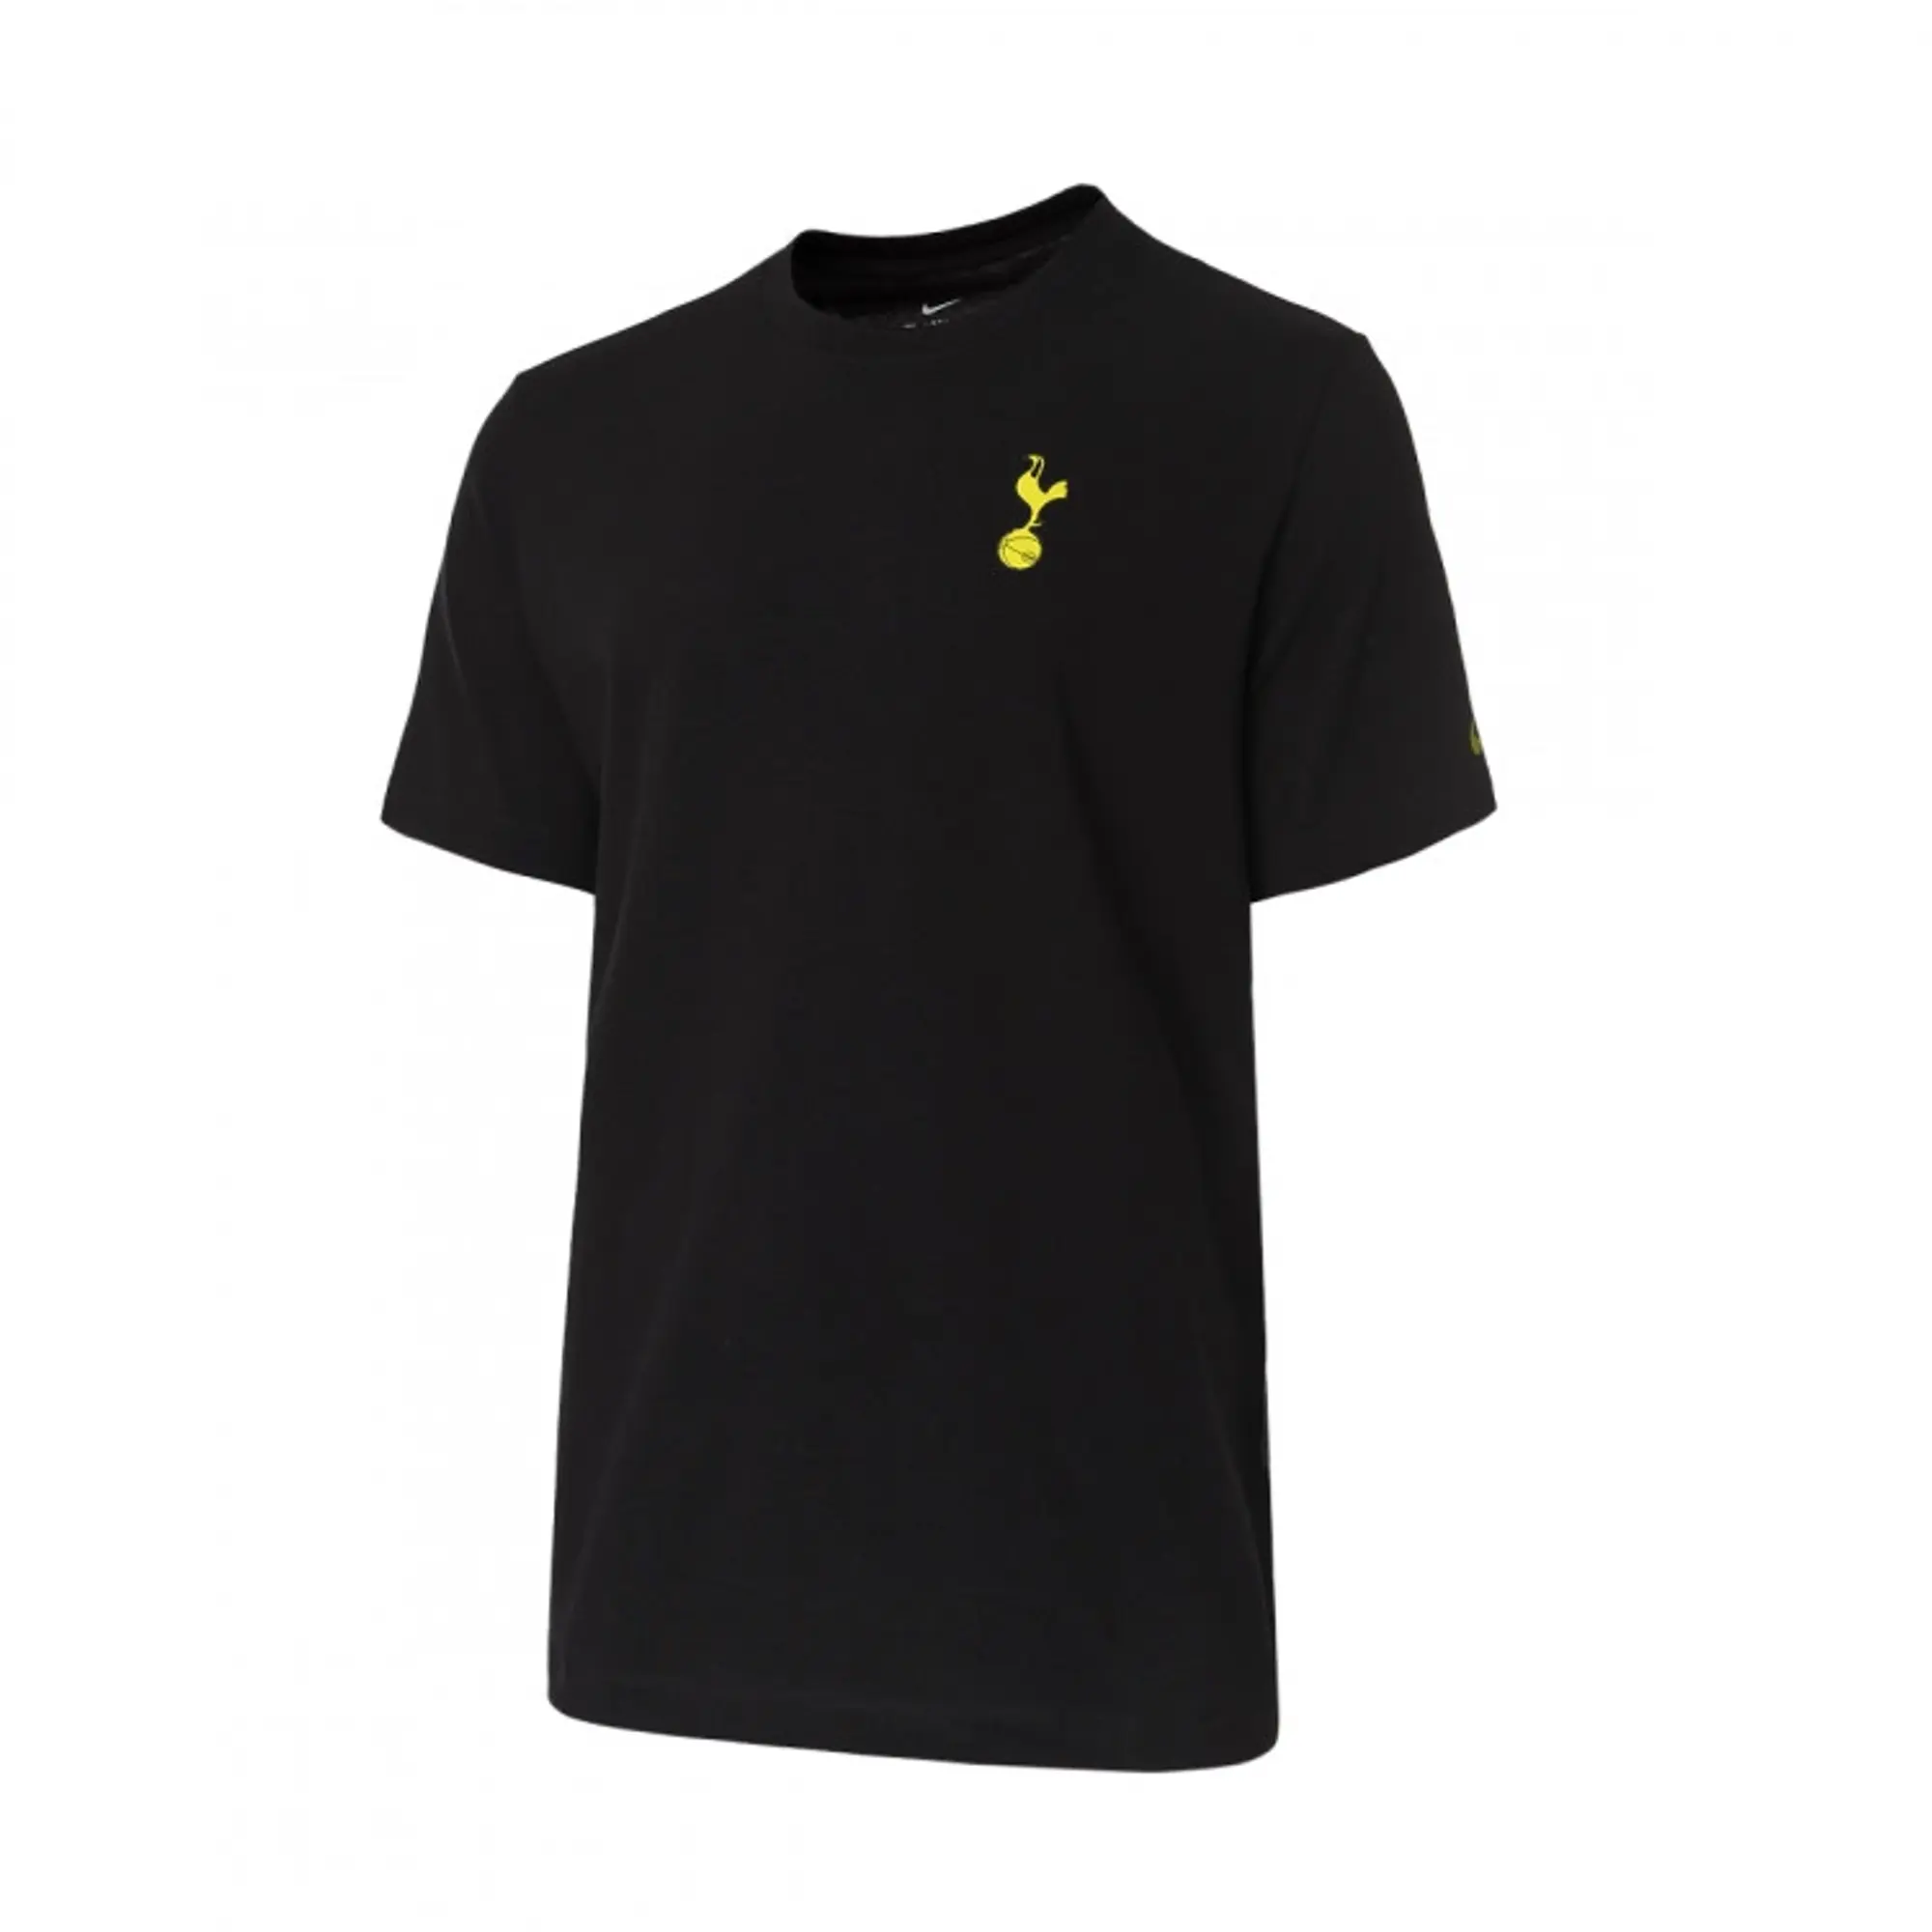 Nike Tottenham T-shirt Travel - Black/yellow -